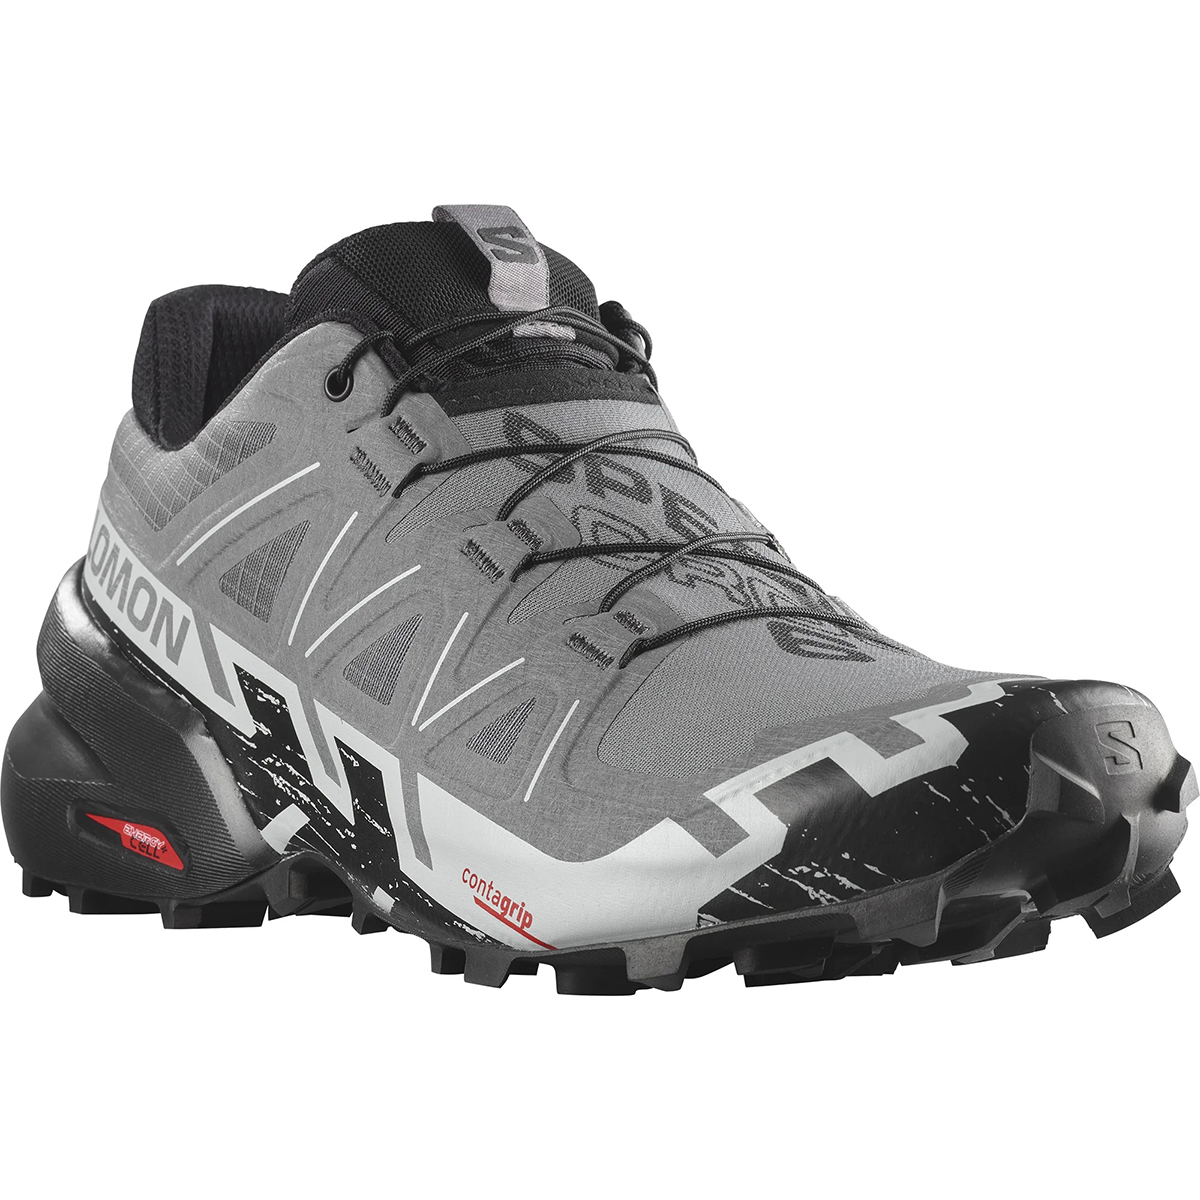 Salomon Men's Speedcross 6 Trail Running Shoes - Size 13